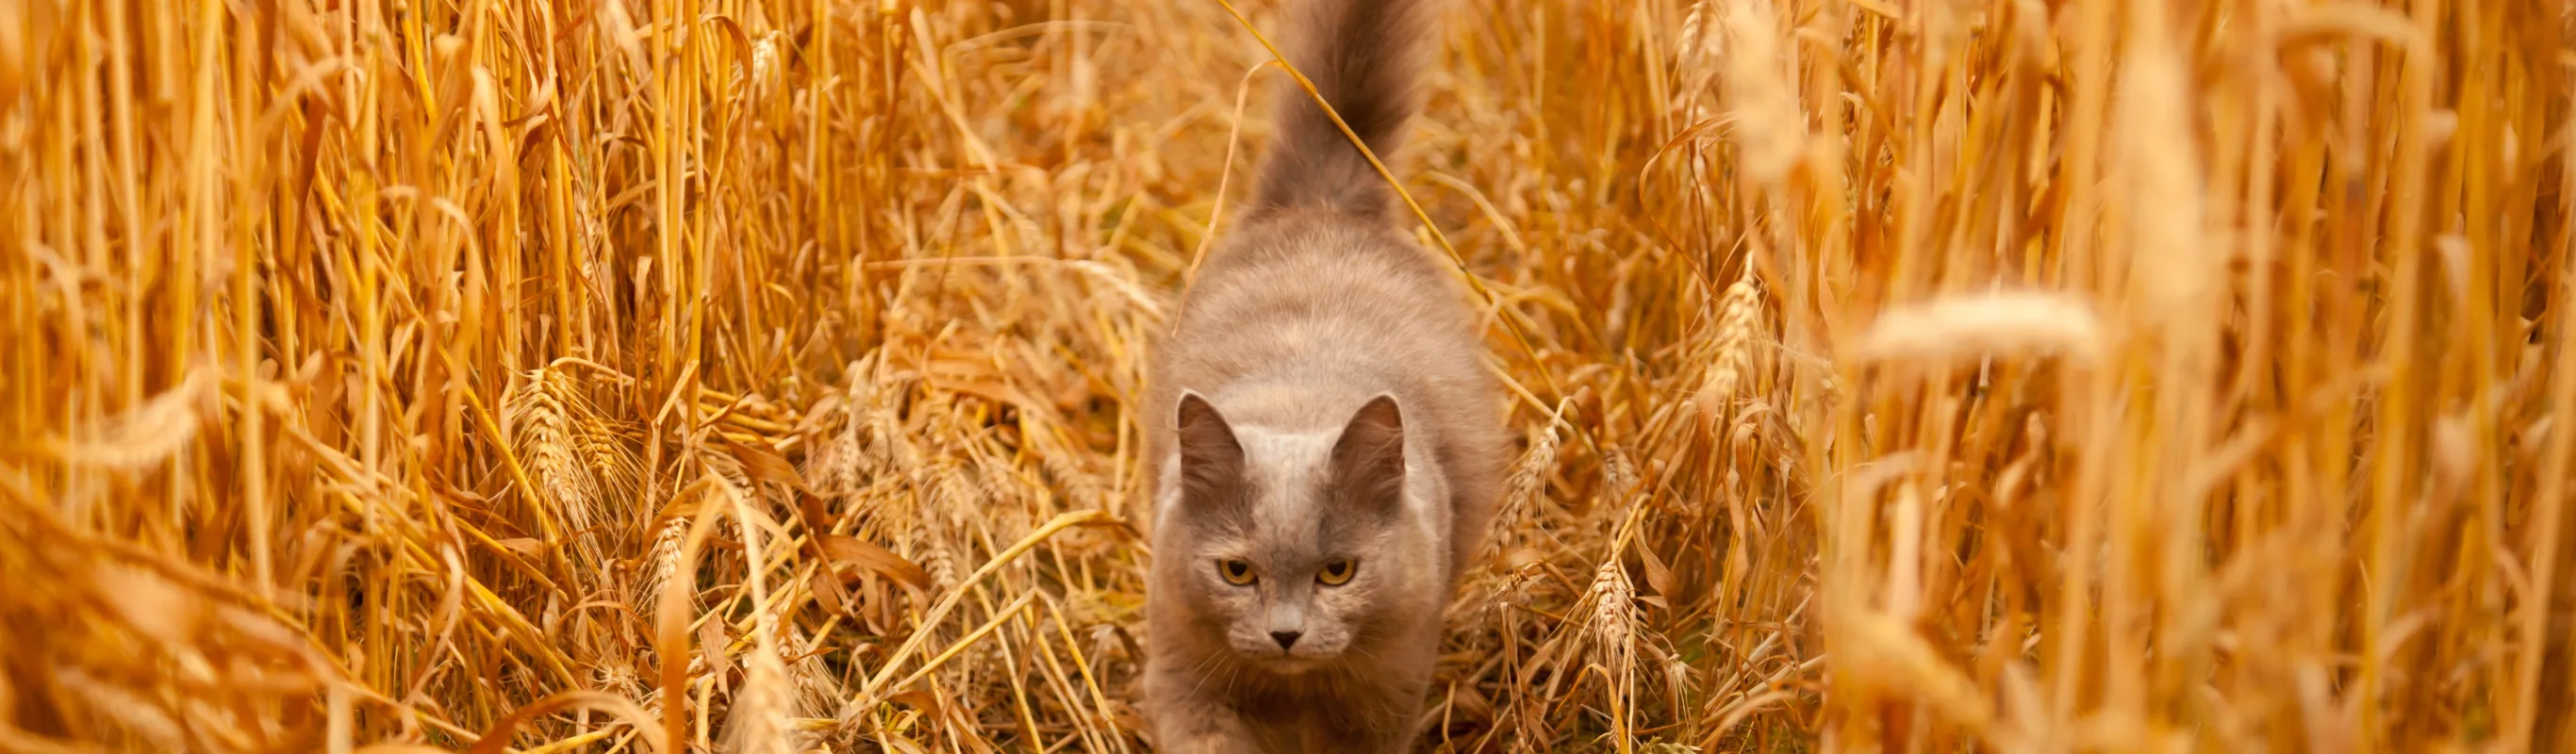 Cat walking through the wheat 